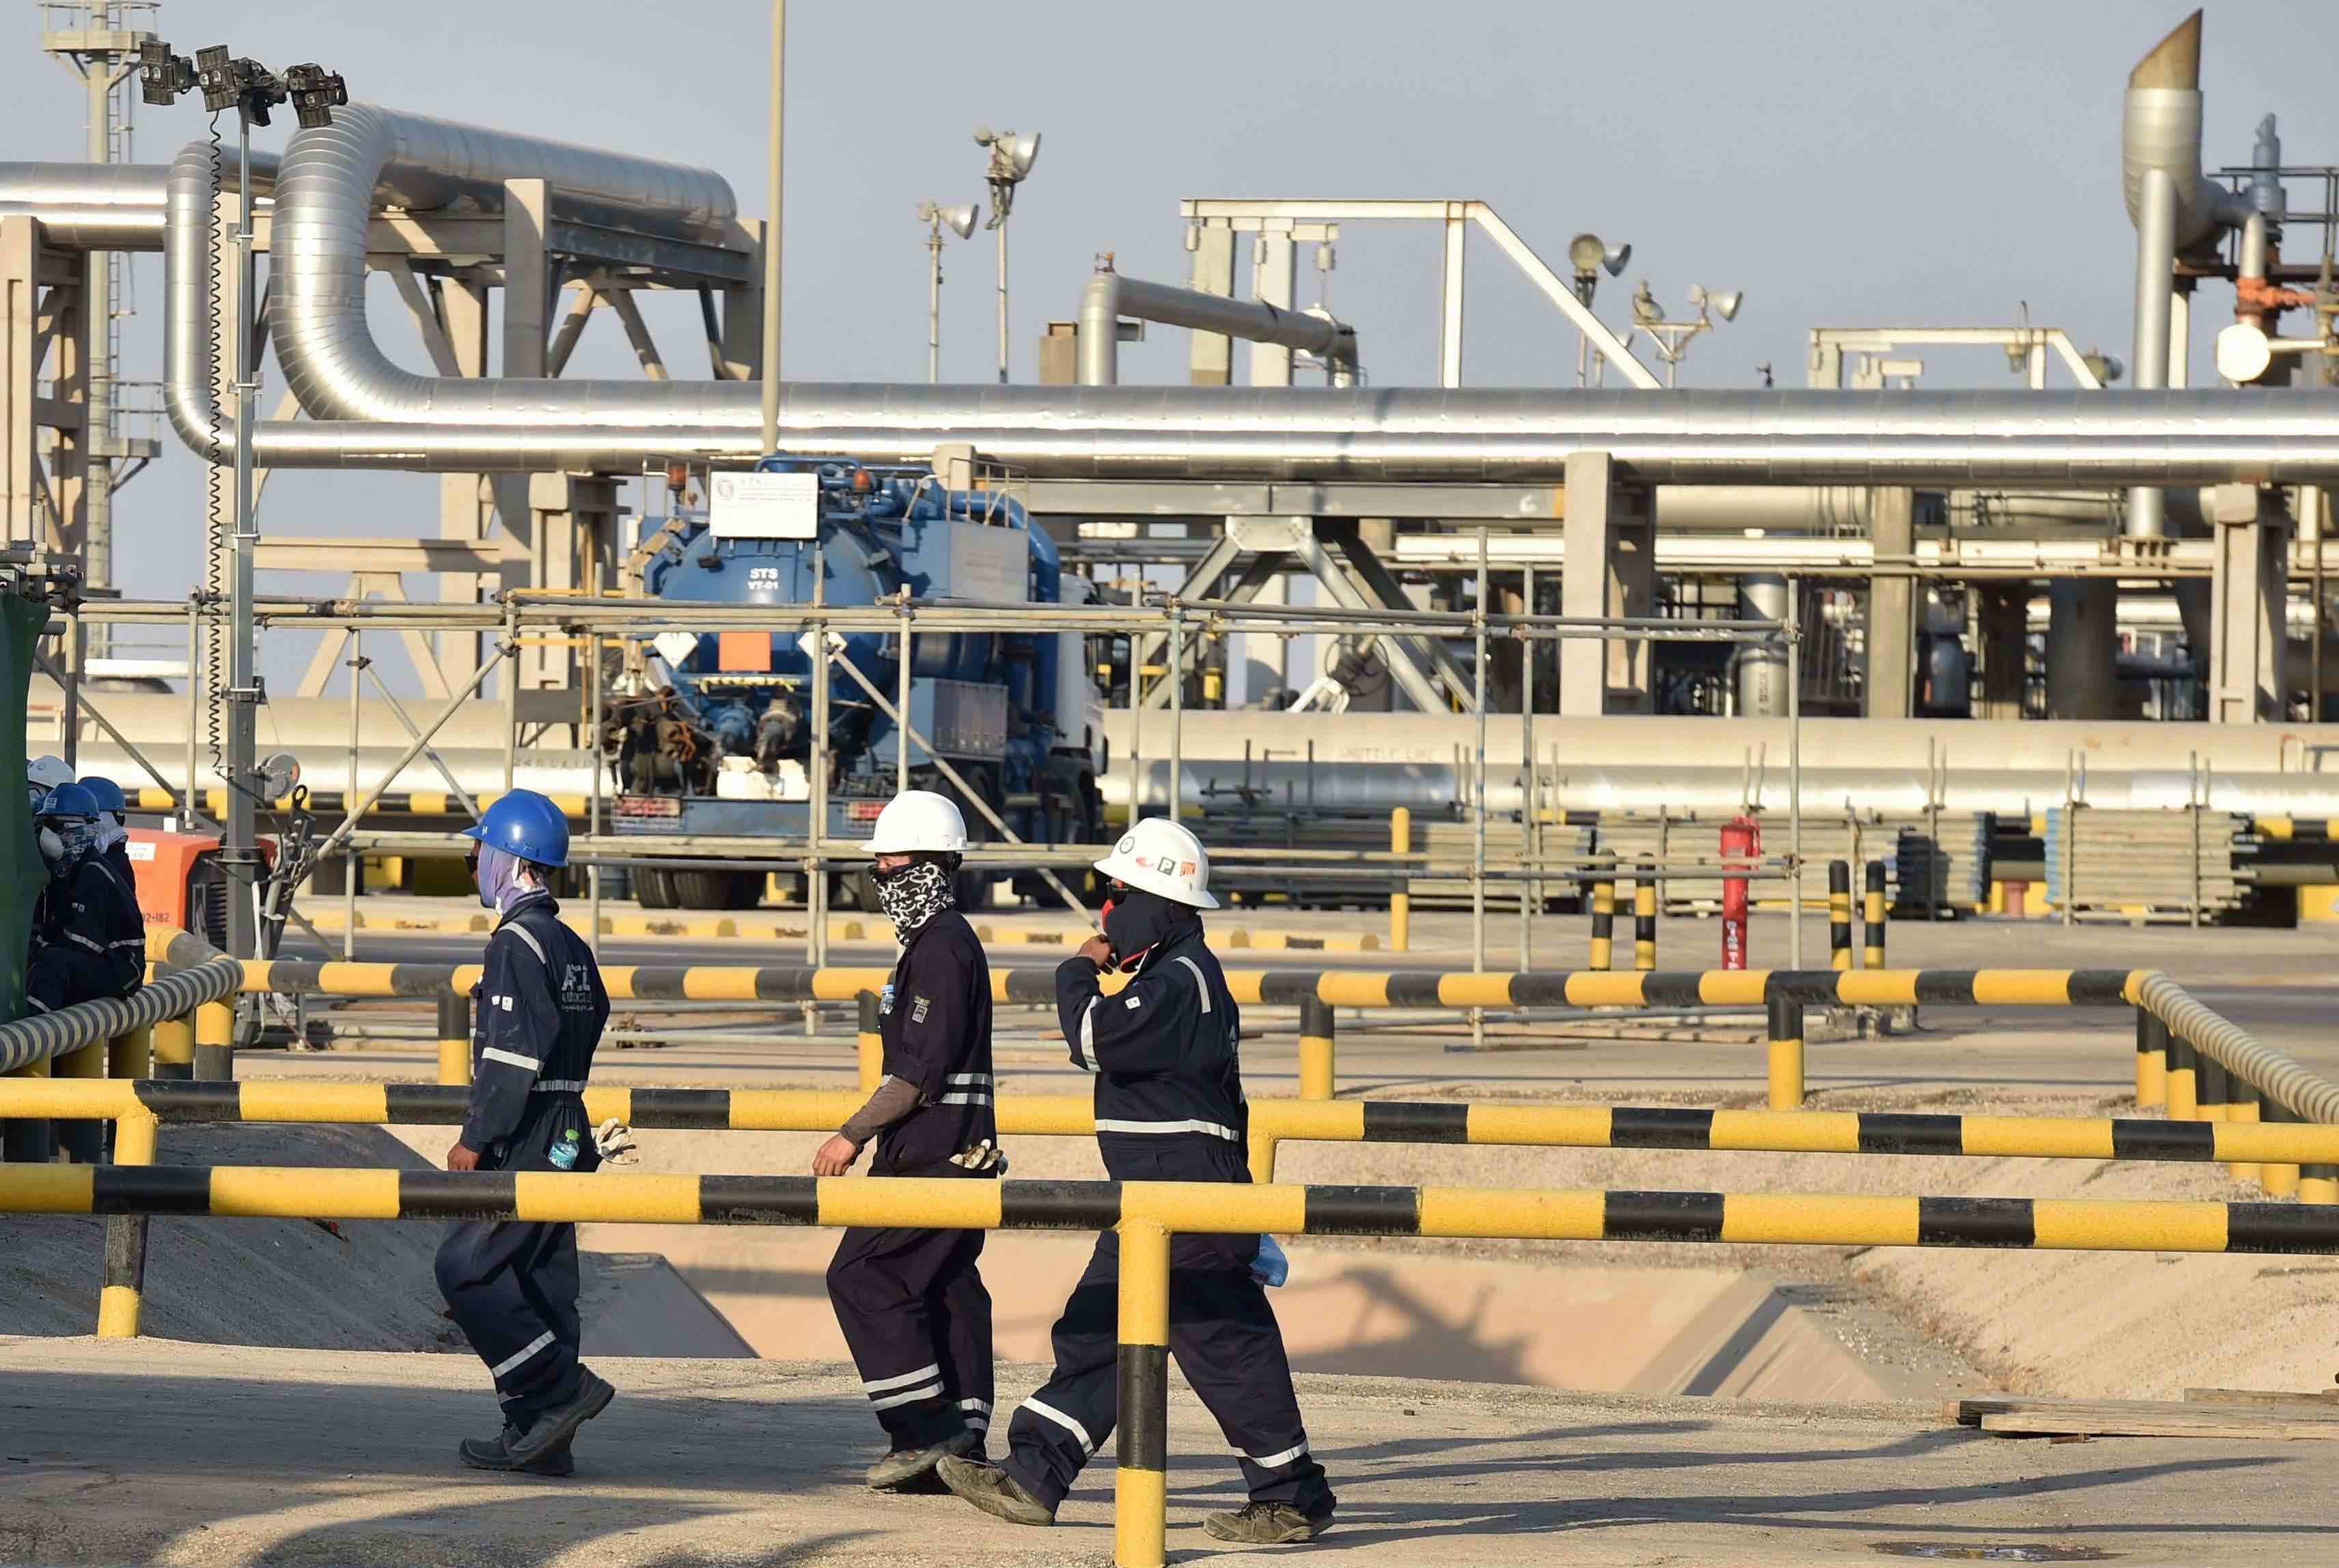 Employees of Aramco oil company at Saudi Arabia’s Abqaiq oil processing plant